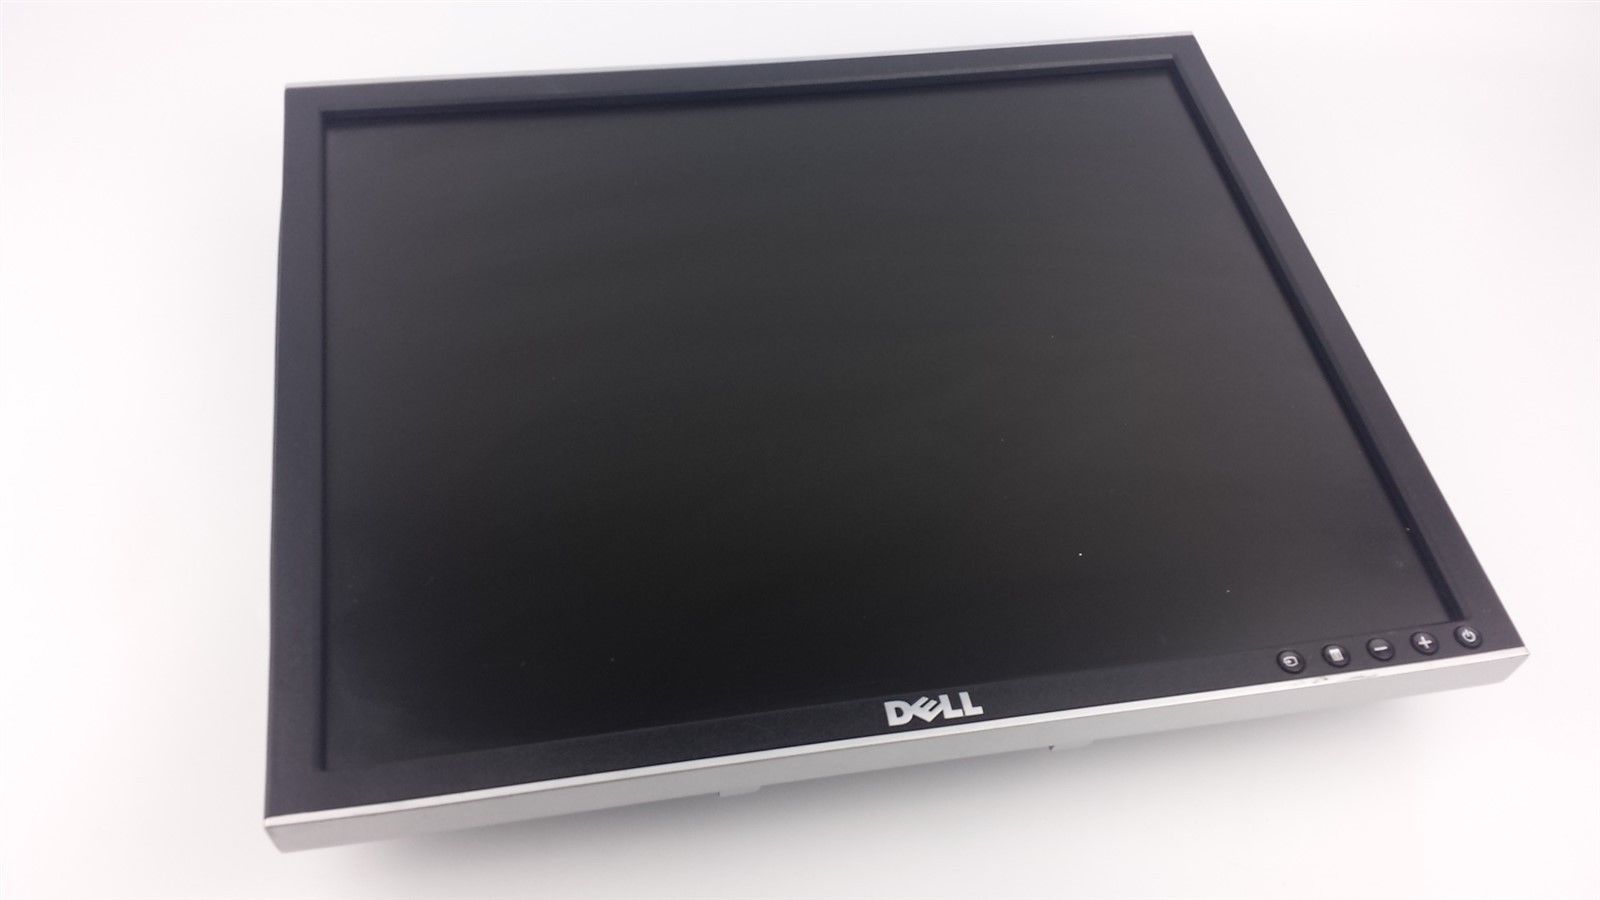 Dell UltraSharp 1907FPt FHD LCD Computer Monitor 19" DC323 w/ Power & VGA Cord